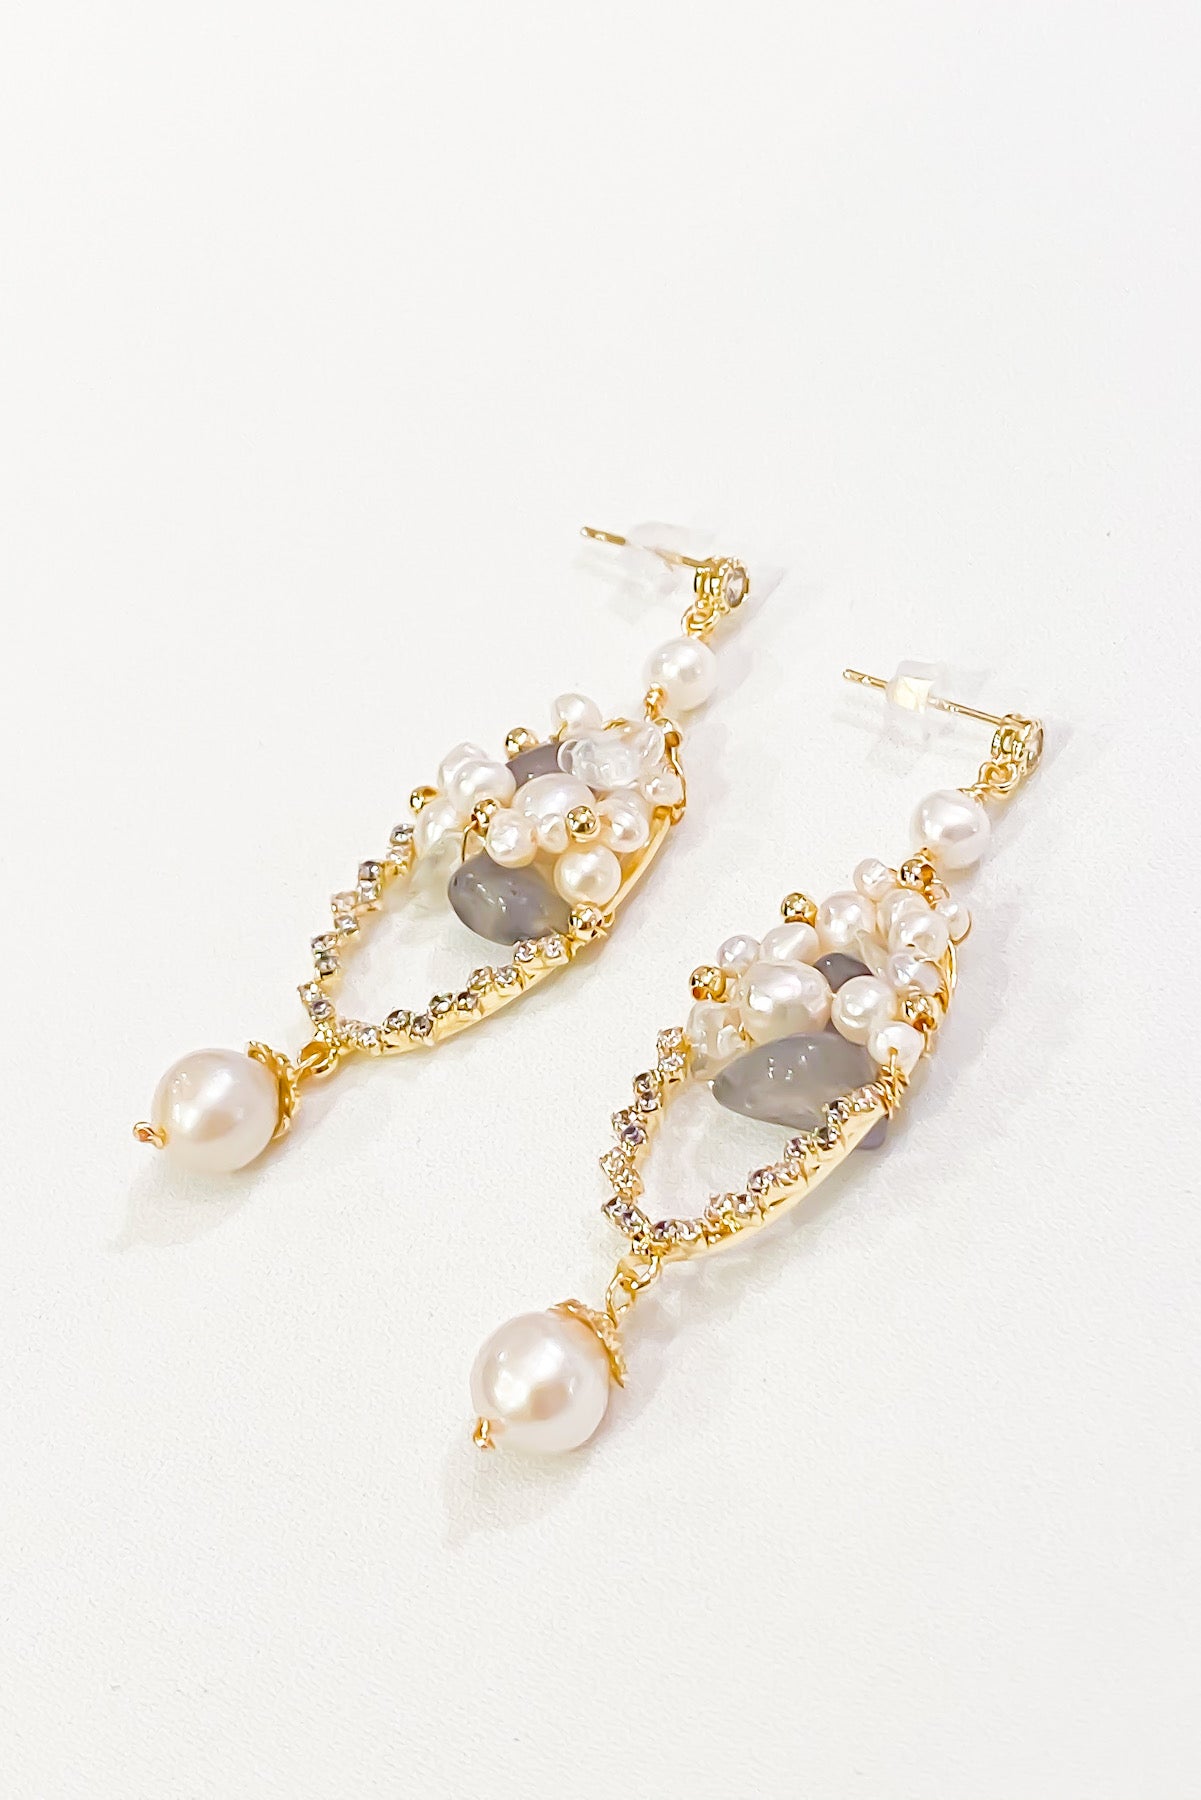 SKYE San Francisco Shop SF Chic Modern Elegant Classy Women Jewelry French Parisian Minimalist Marquis 18K Gold Crystal Pearl Earrings 6